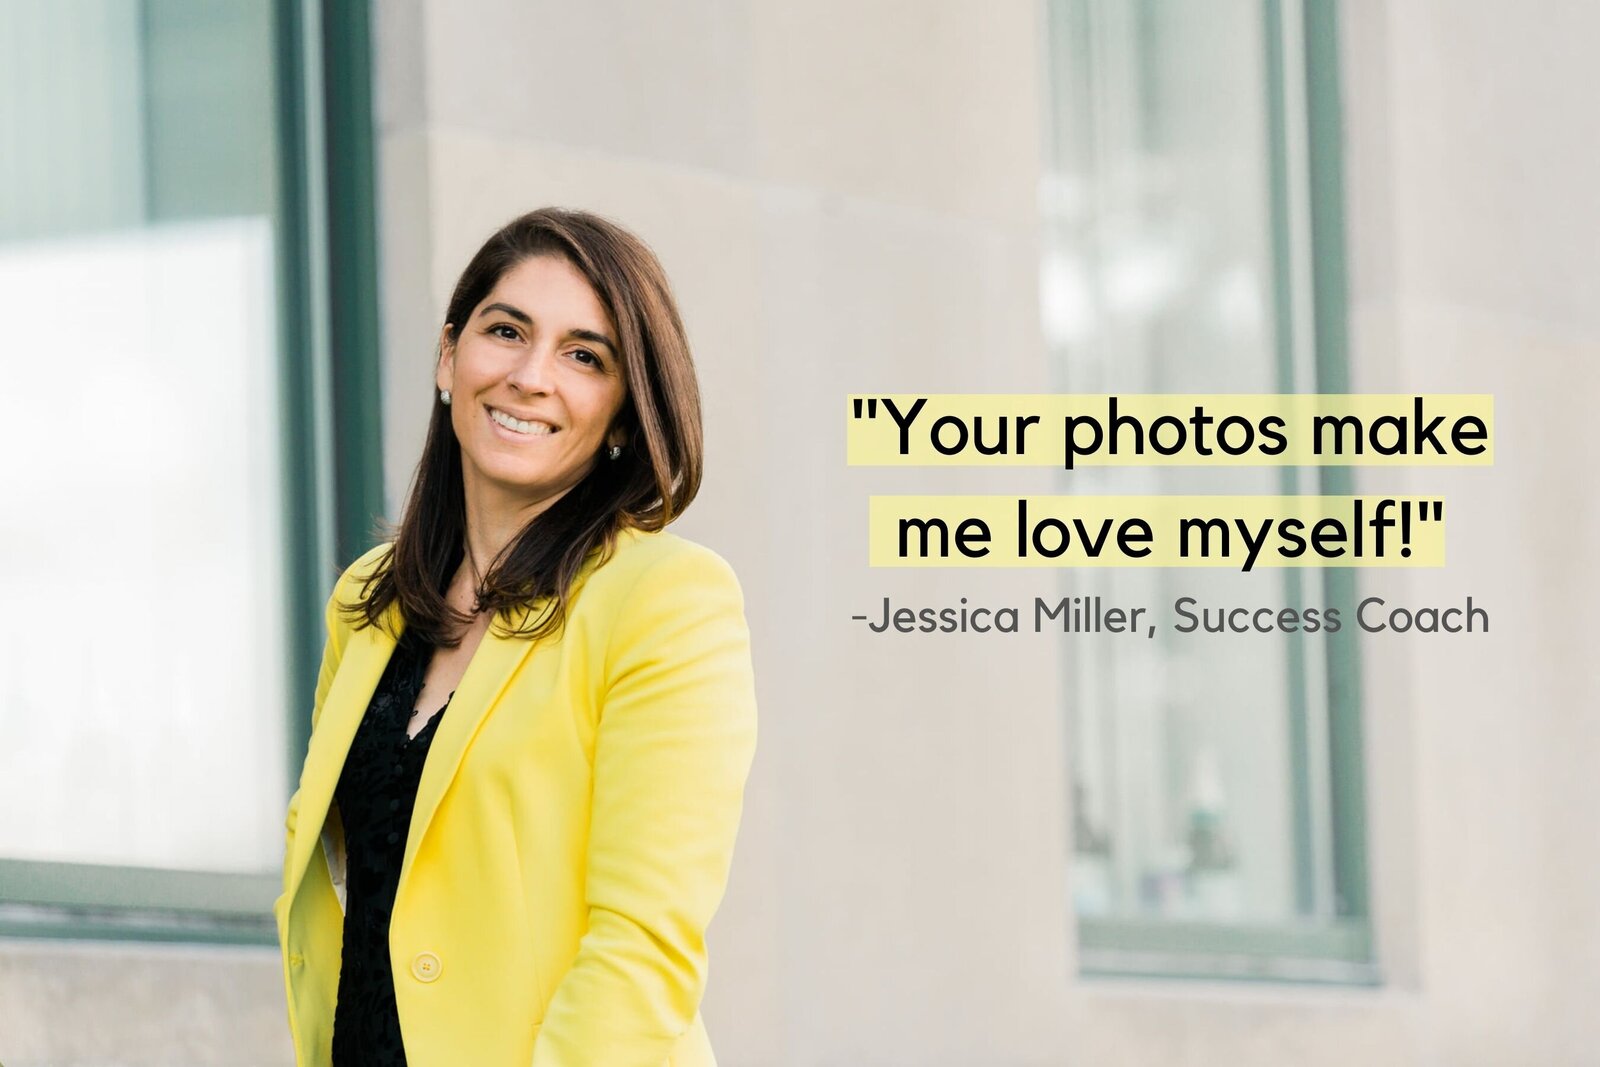 _Your photos make me love myself! -Jessica Miller, Success Coach